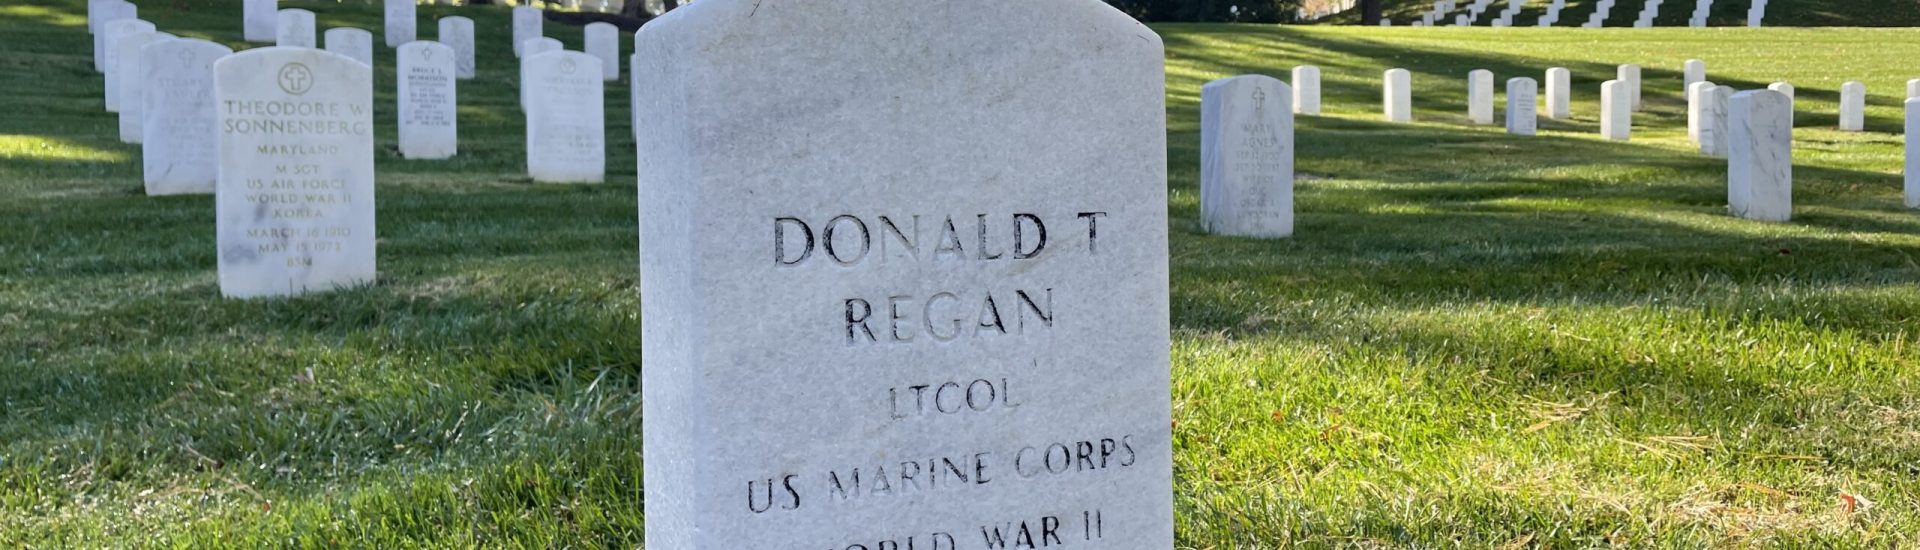 Don Regan